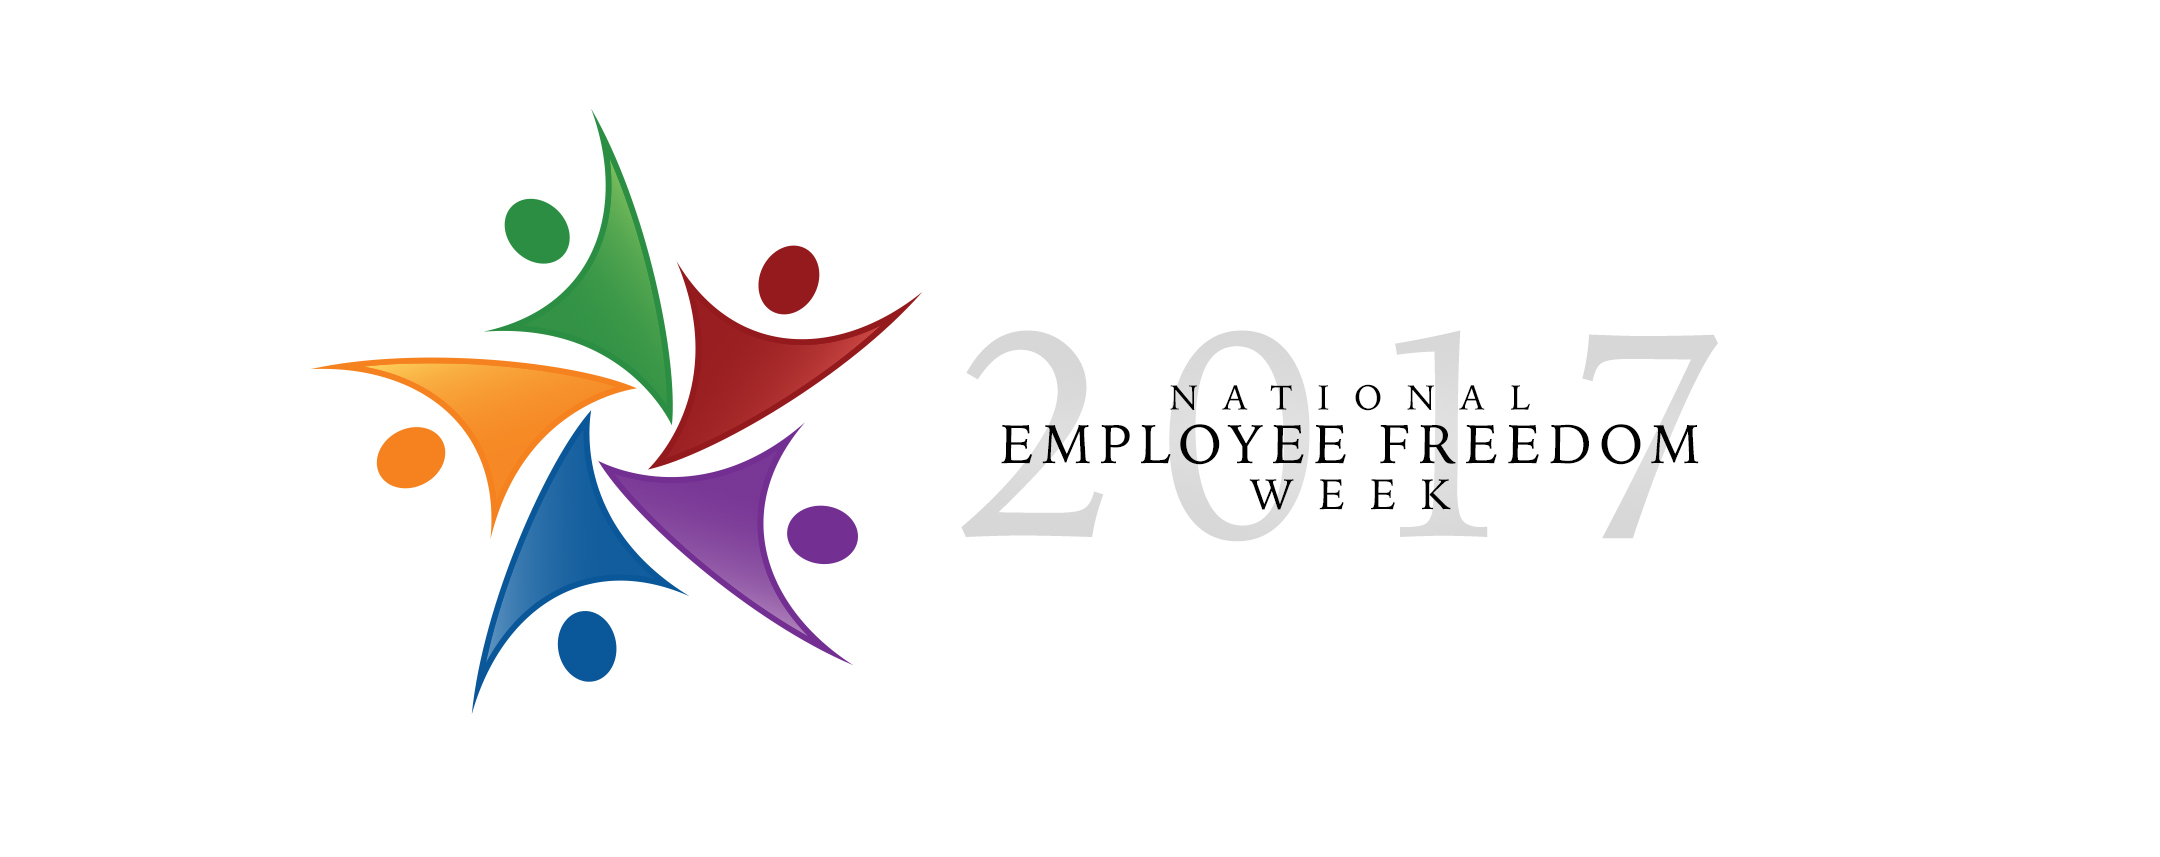 employee-freedom-week-2017-FEATURED.jpg